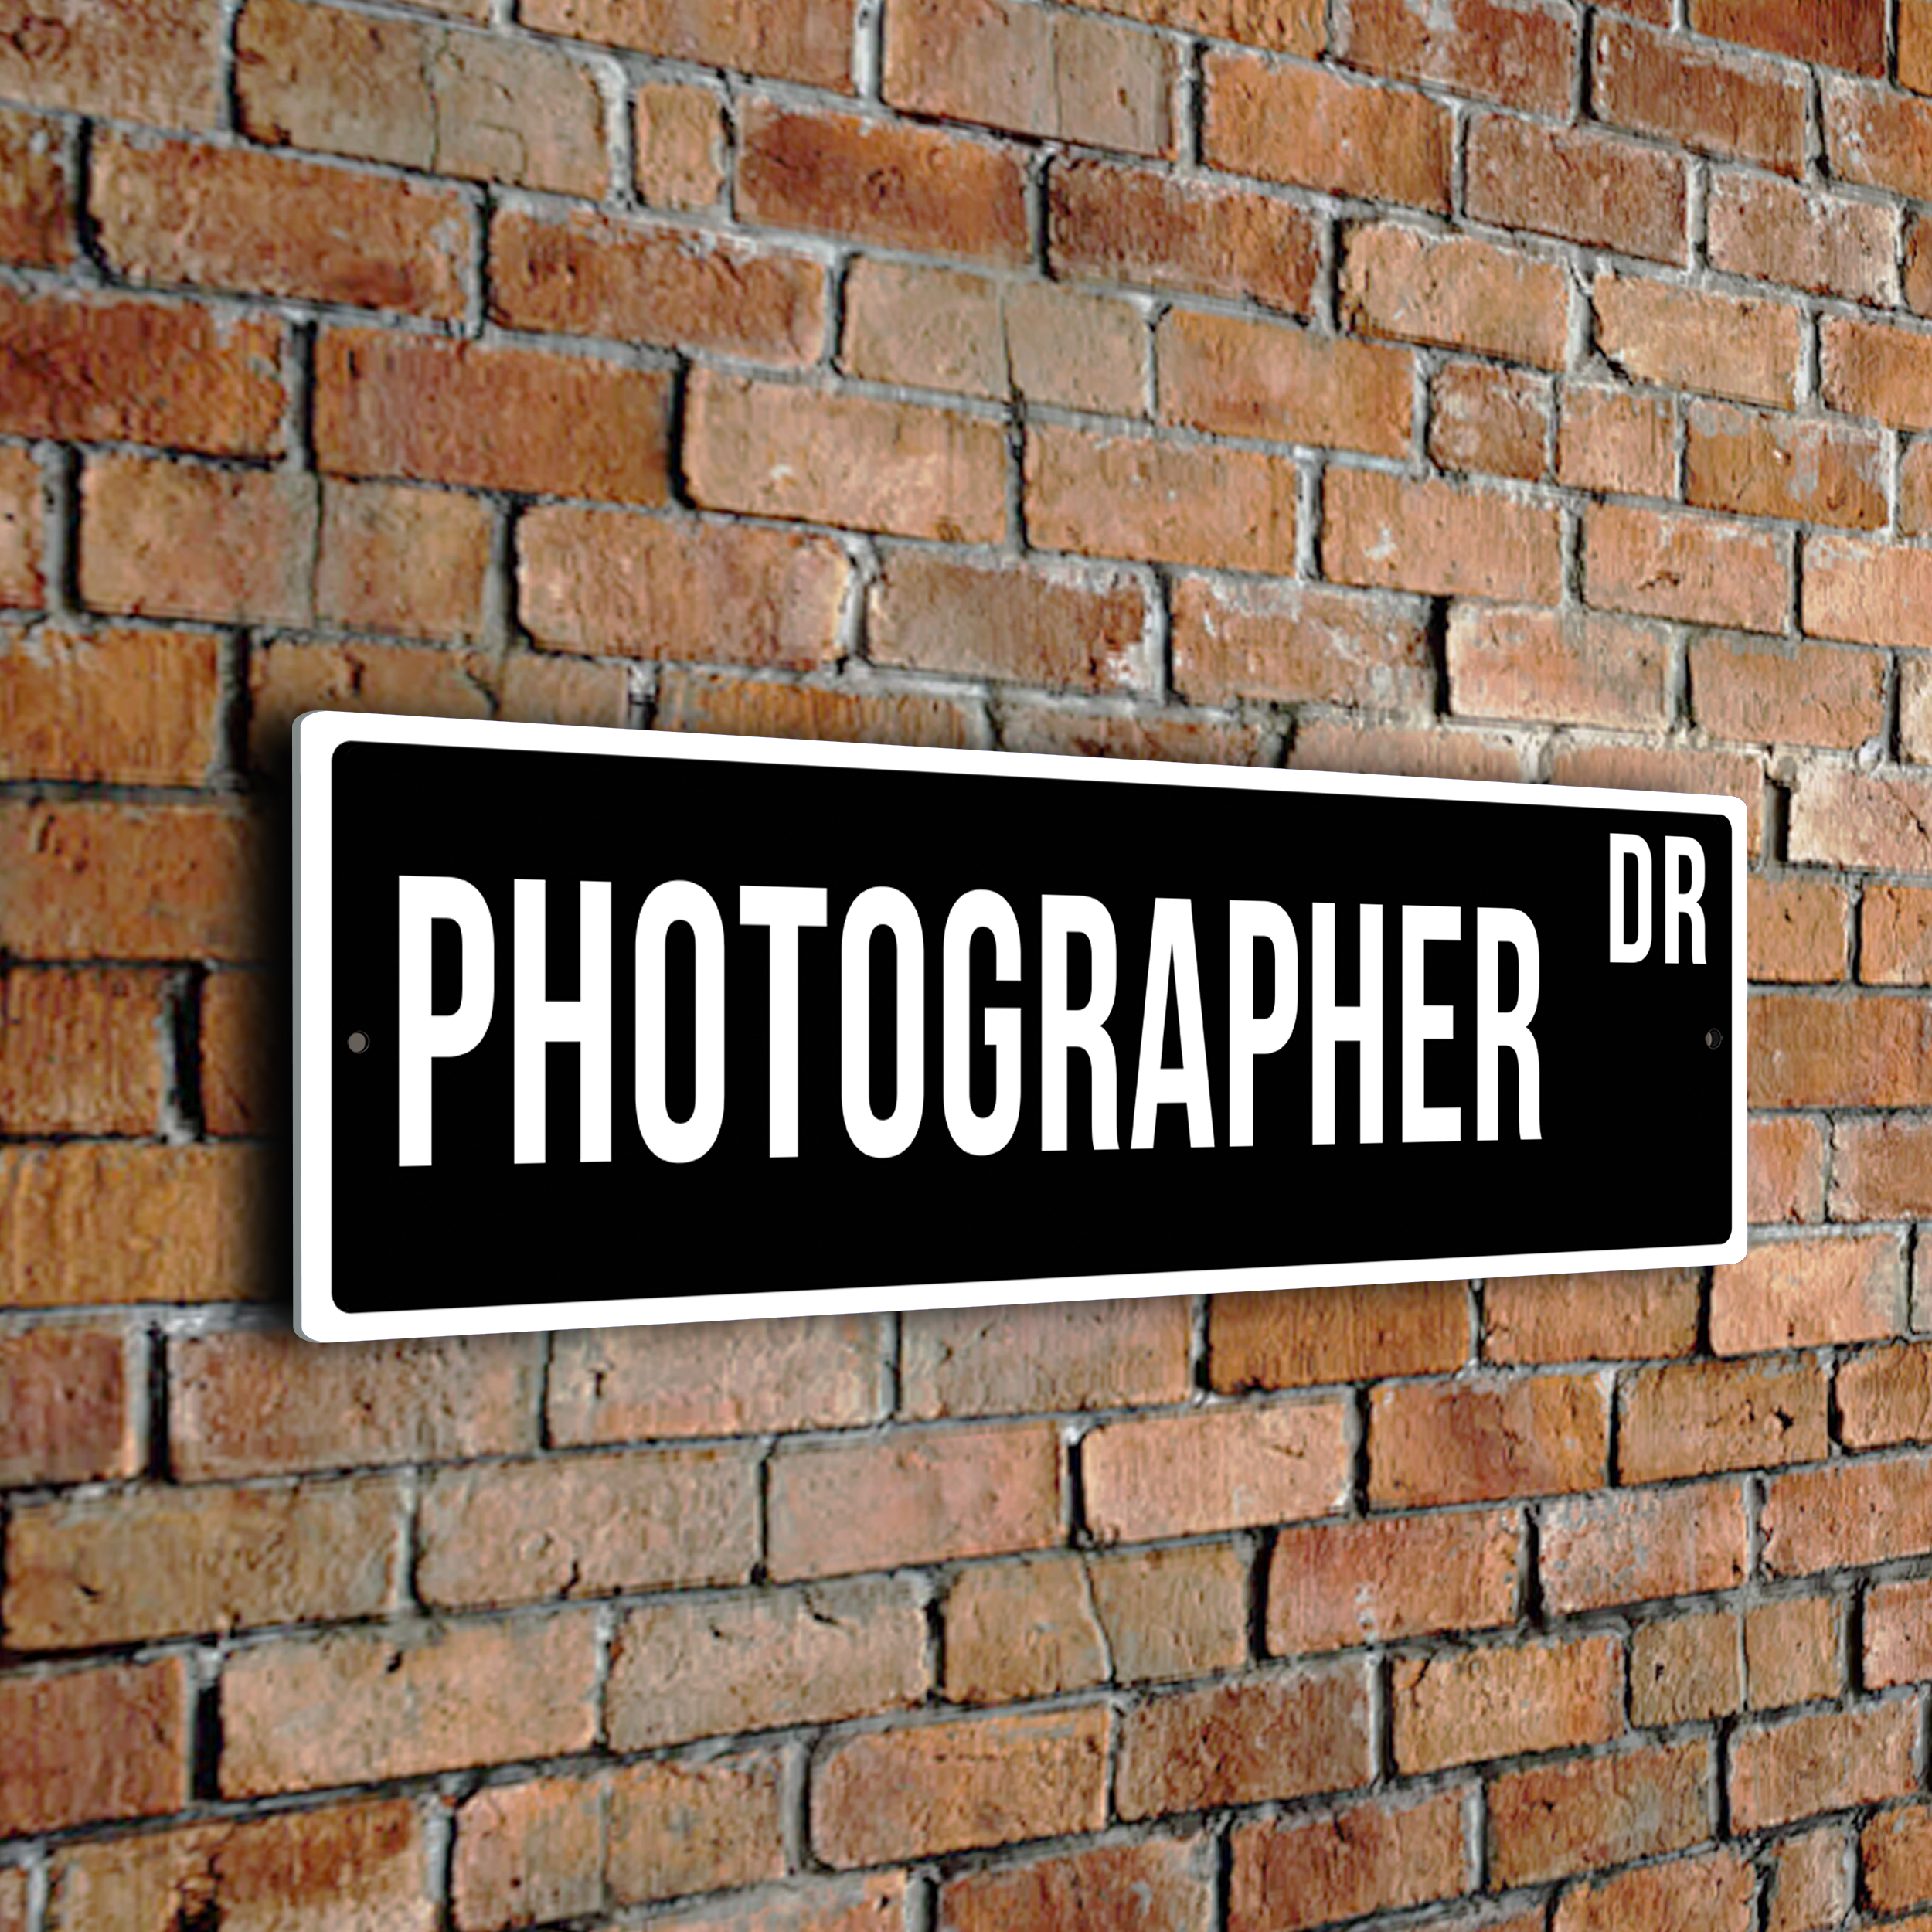 Photographer street sign